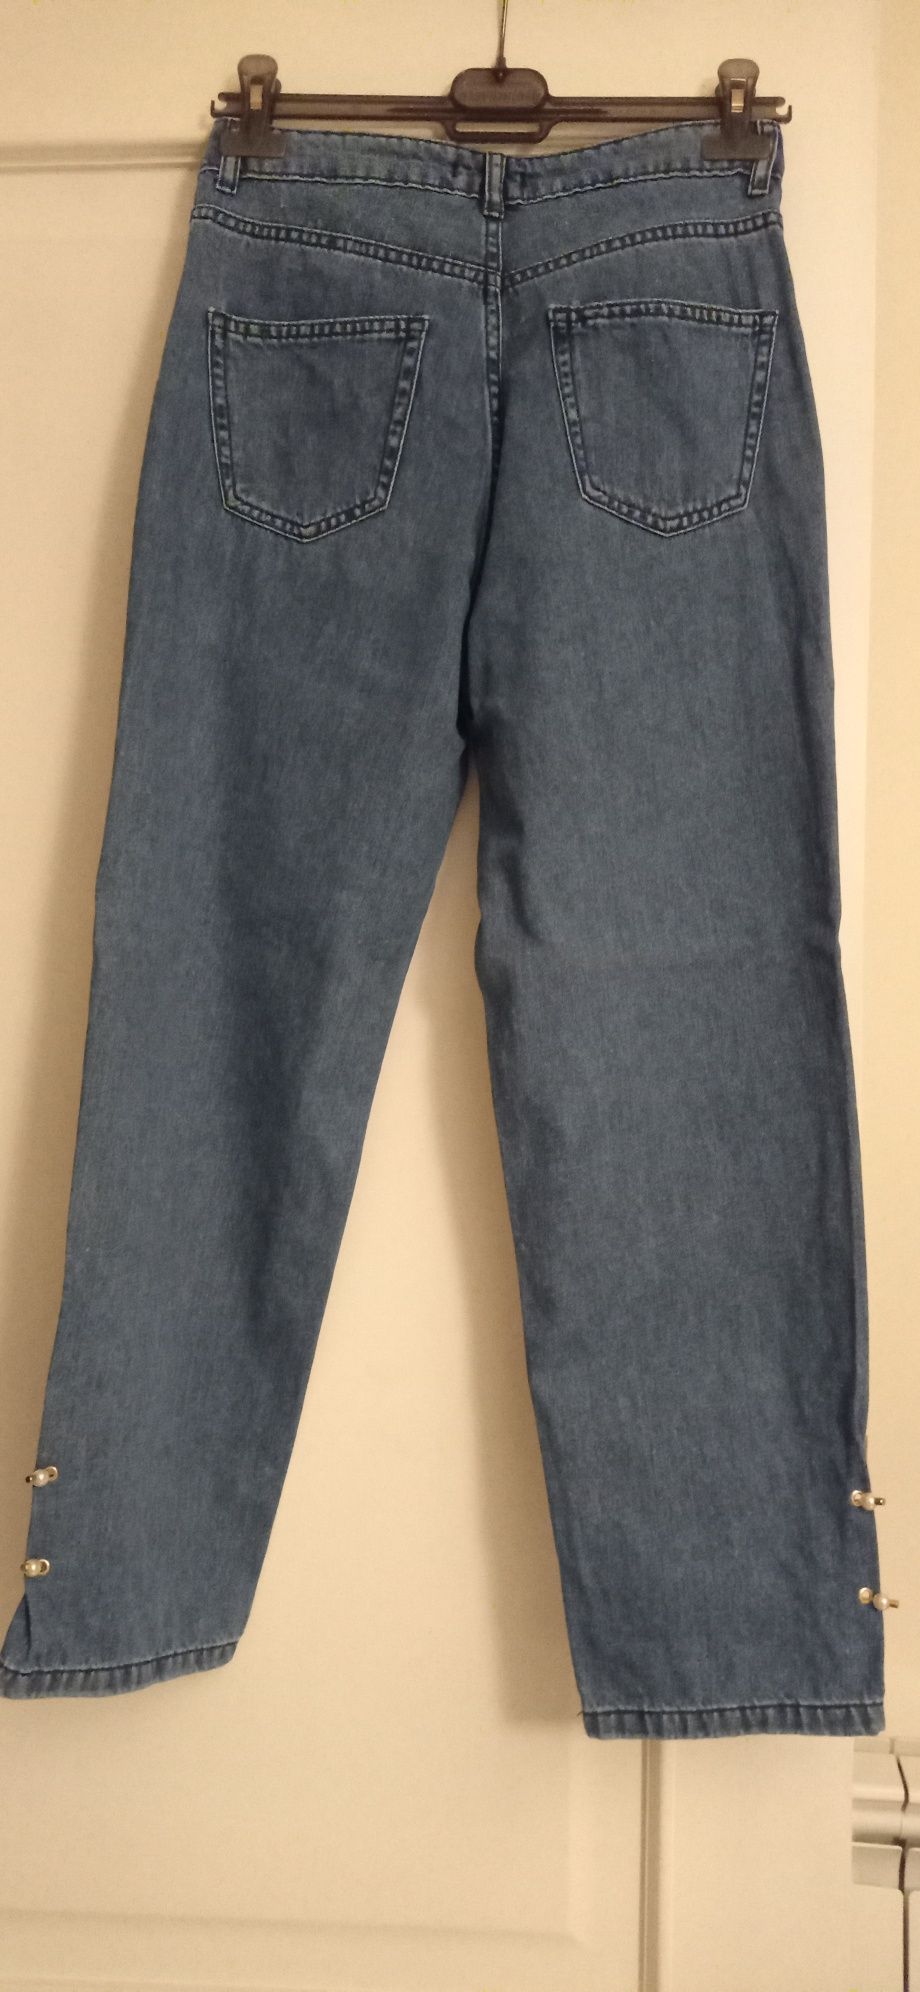 Jeans Modalfa tamanho 36